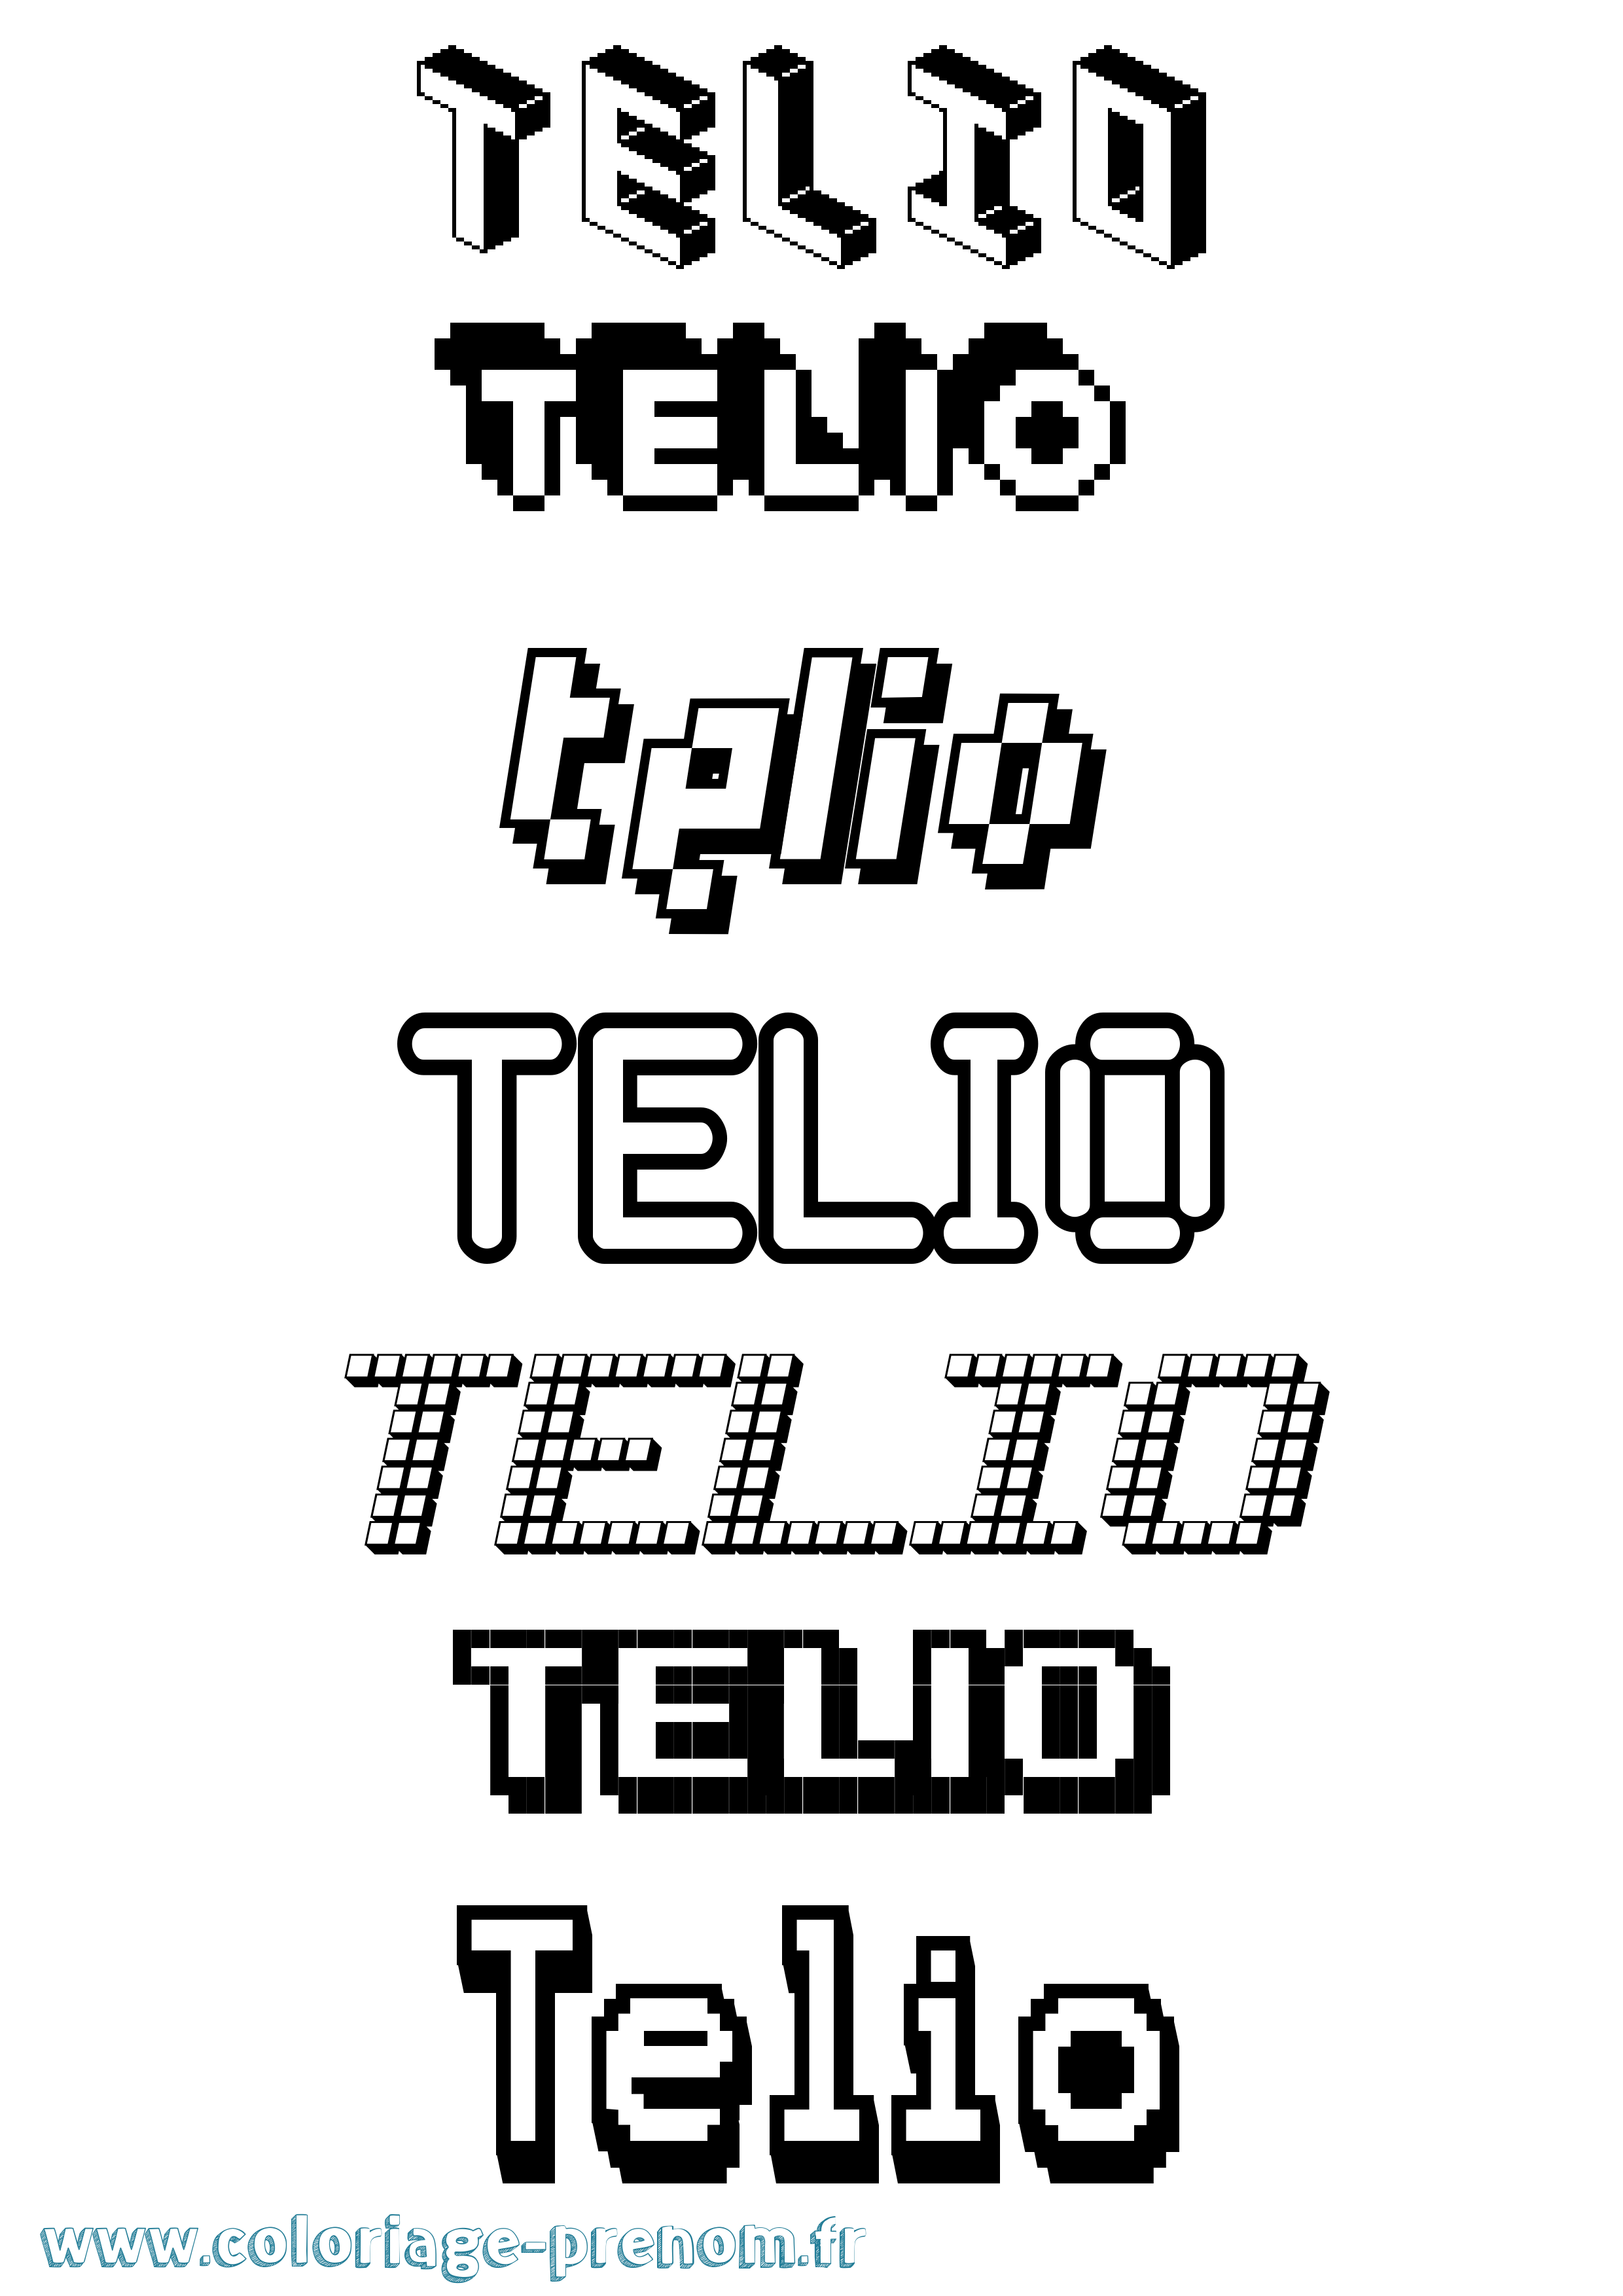 Coloriage prénom Telio Pixel